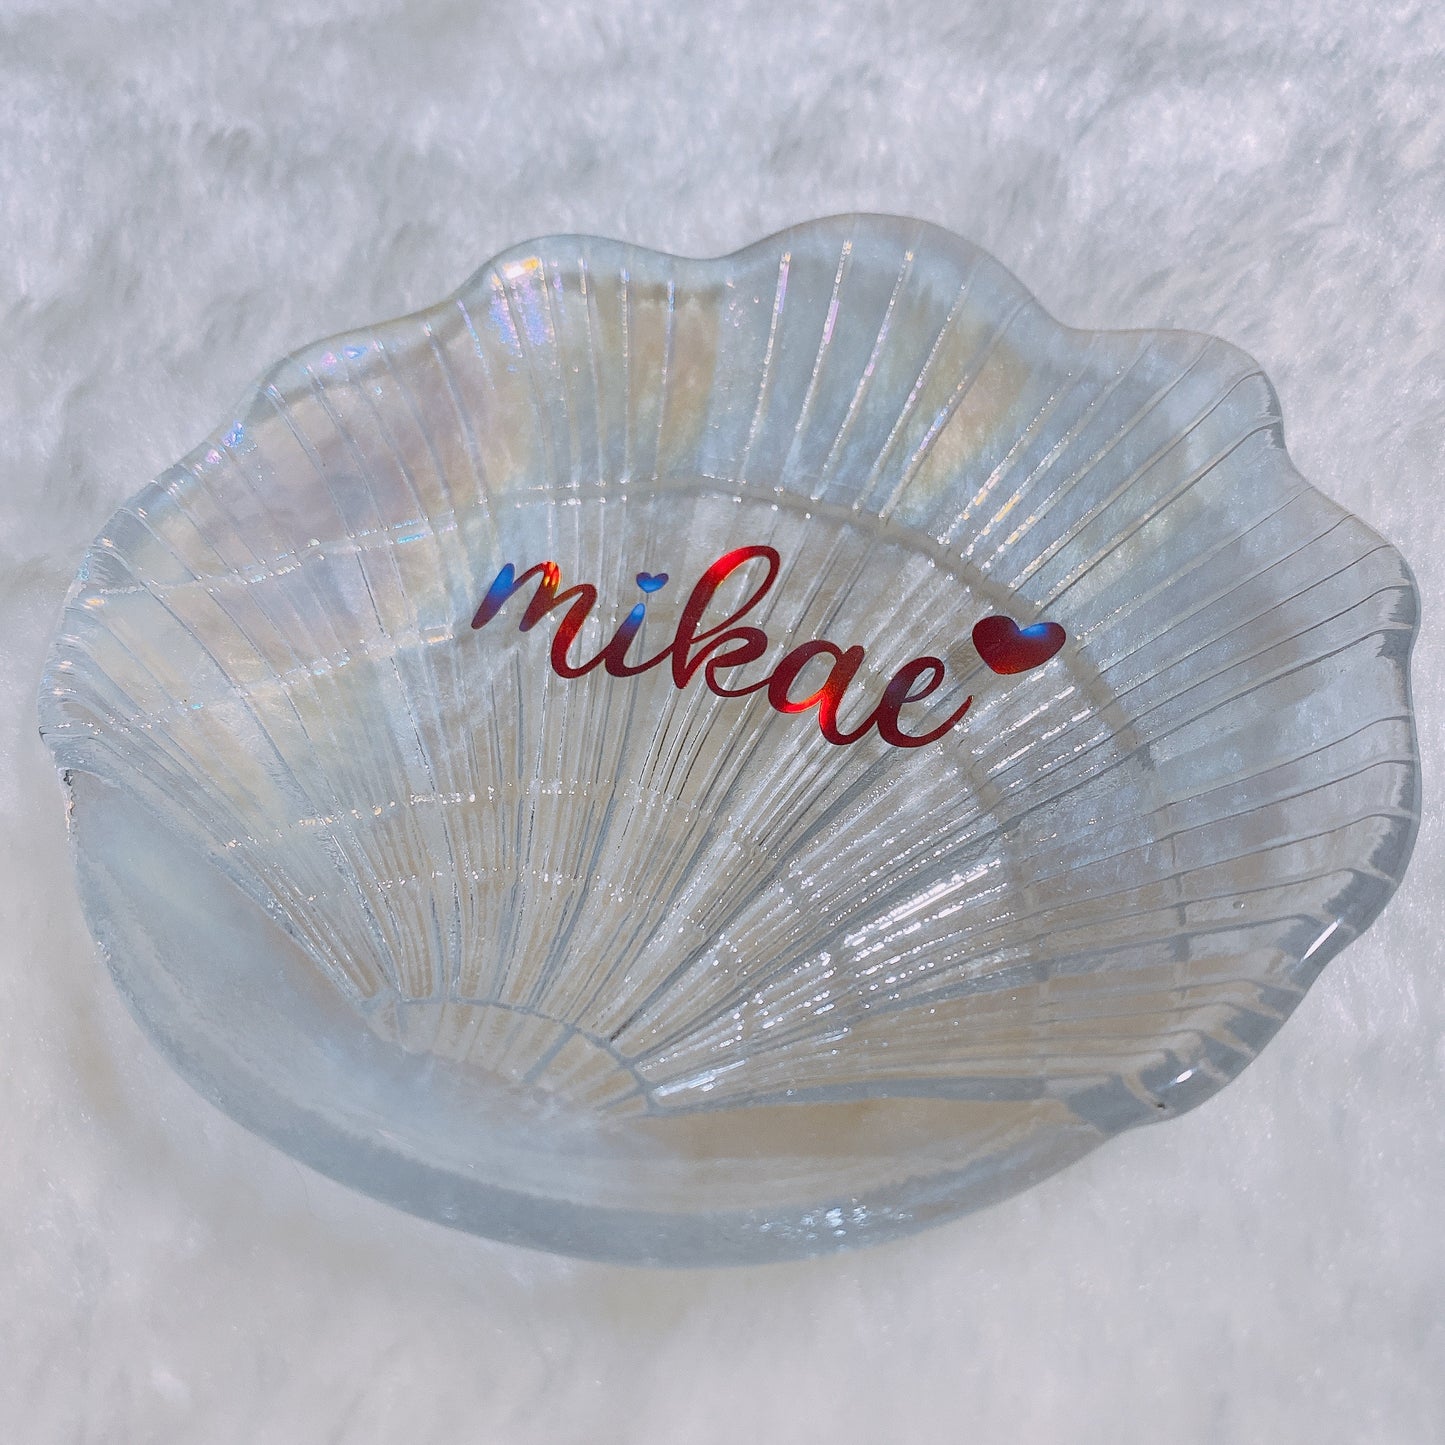 Iridescent Mermaid Shell Trinklet Tray